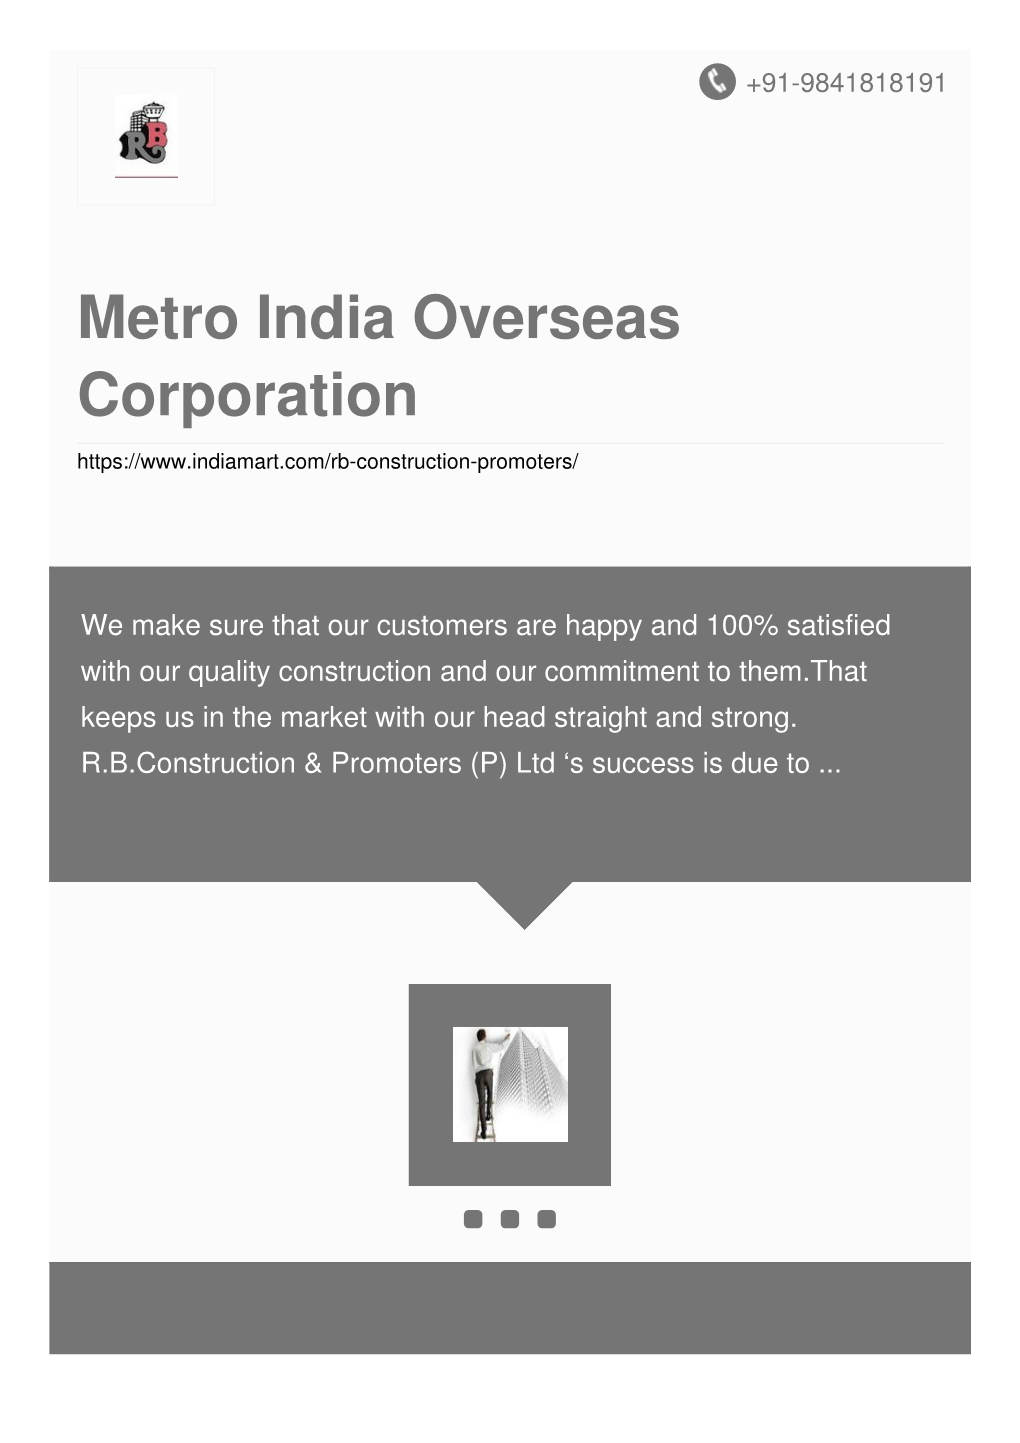 Metro India Overseas Corporation